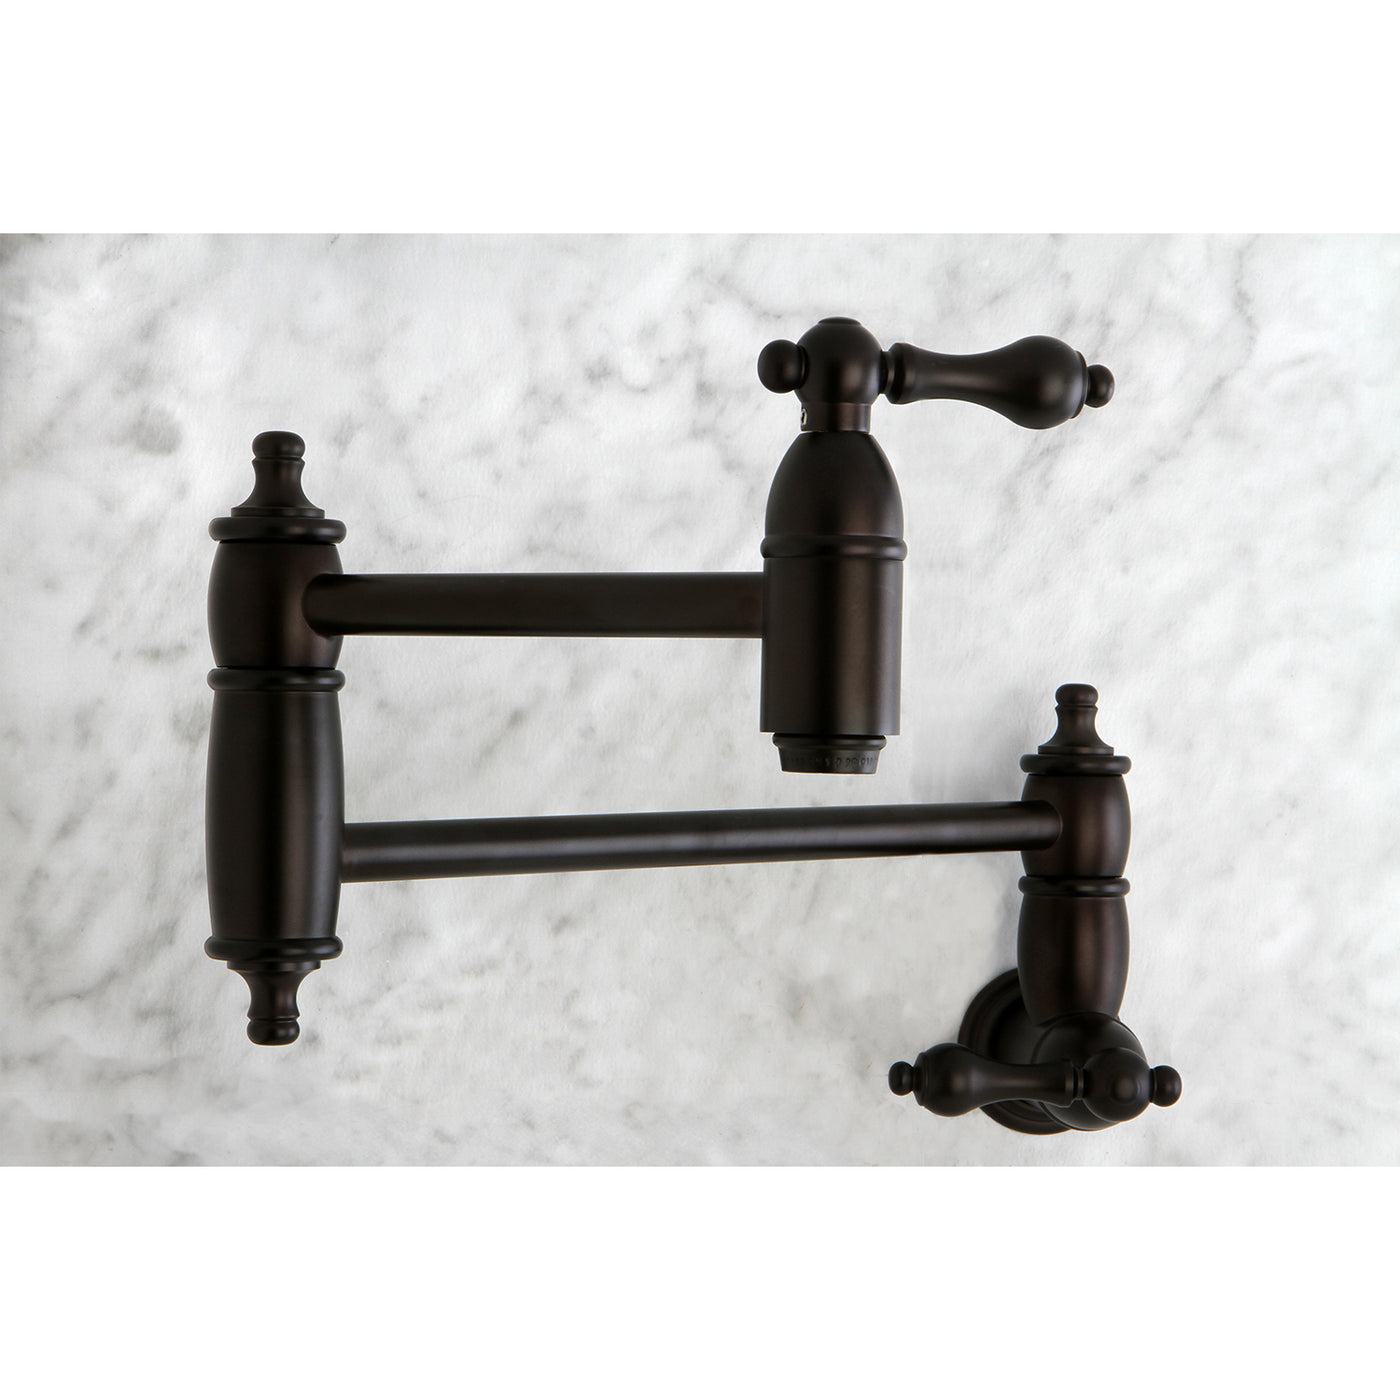 Elements of Design ES3105AL Wall Mount Pot Filler Kitchen Faucet, Oil Rubbed Bronze